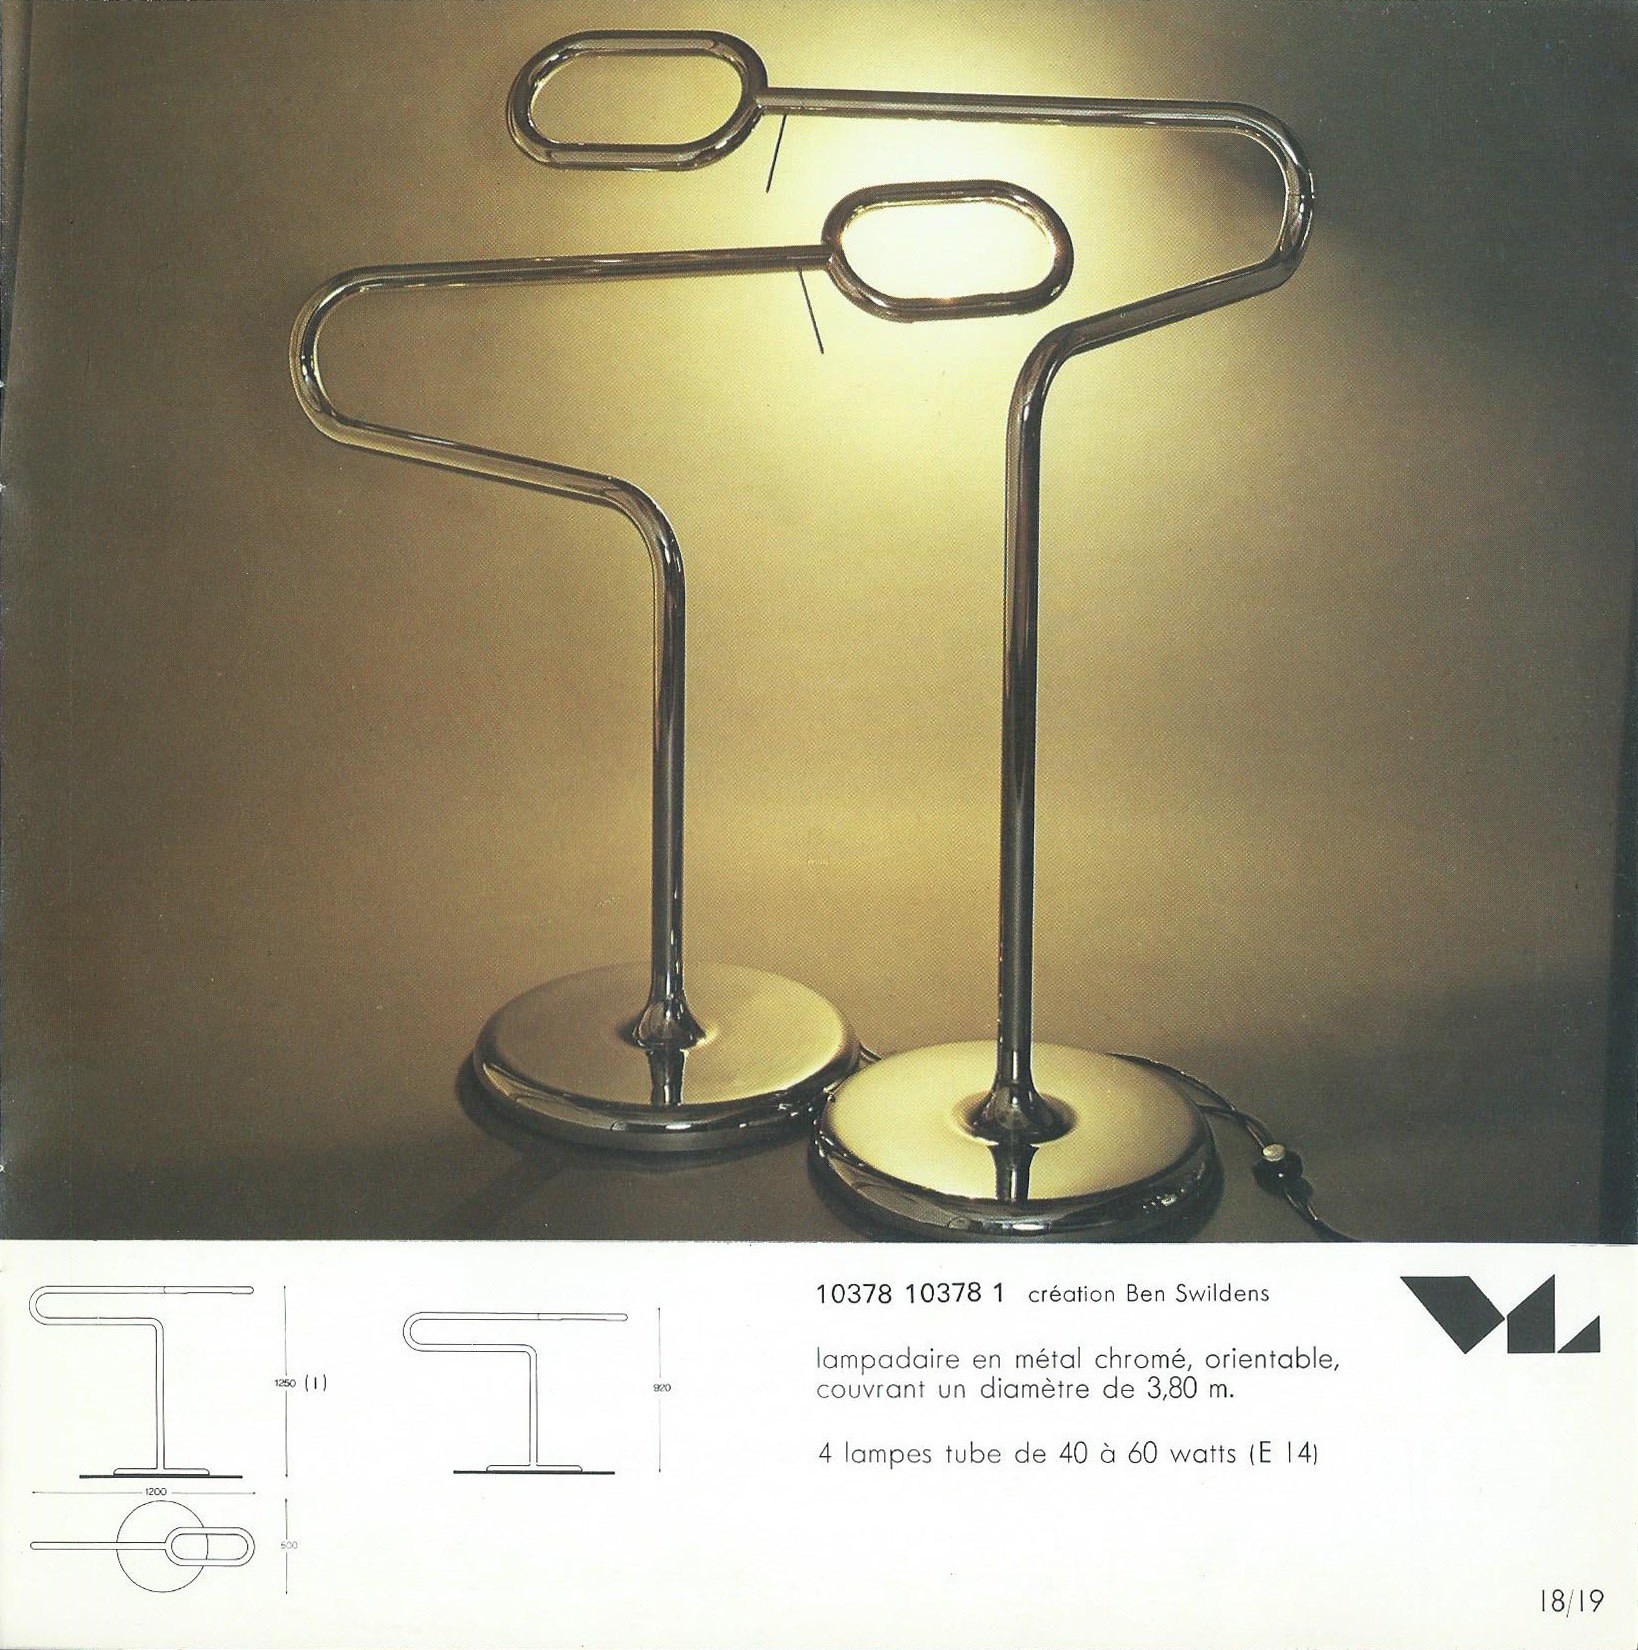 Verre Lumiere Catalogue, 1973